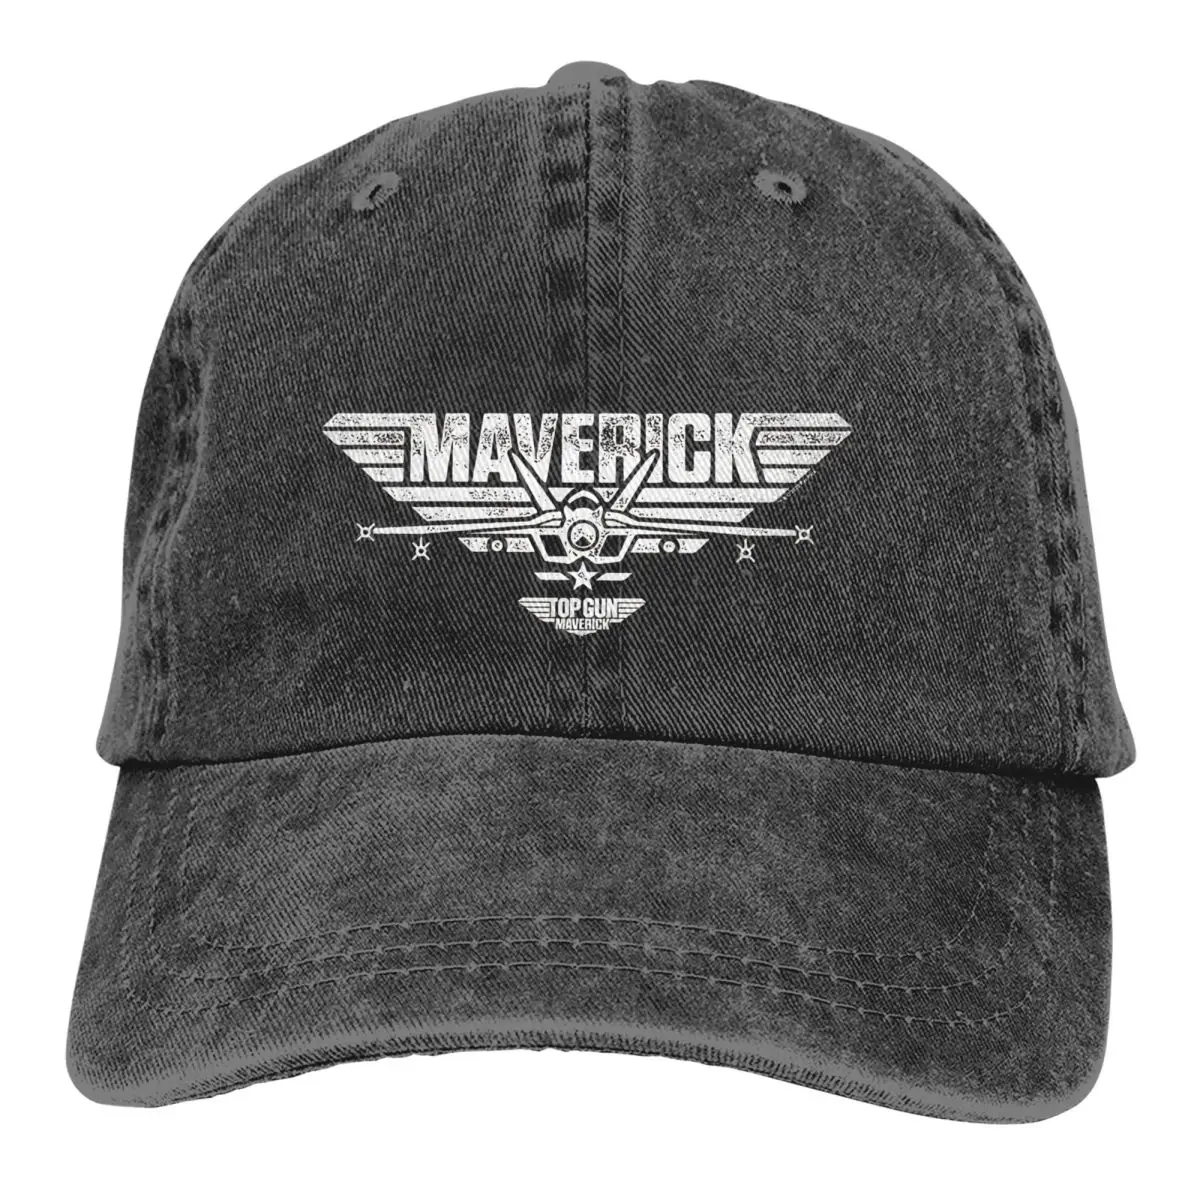 

Multicolor Hat Peaked Men Women's Cowboy Cap Top Gun Maverick Centered Jet Logo Baseball Caps Personalized Visor Protect Hats